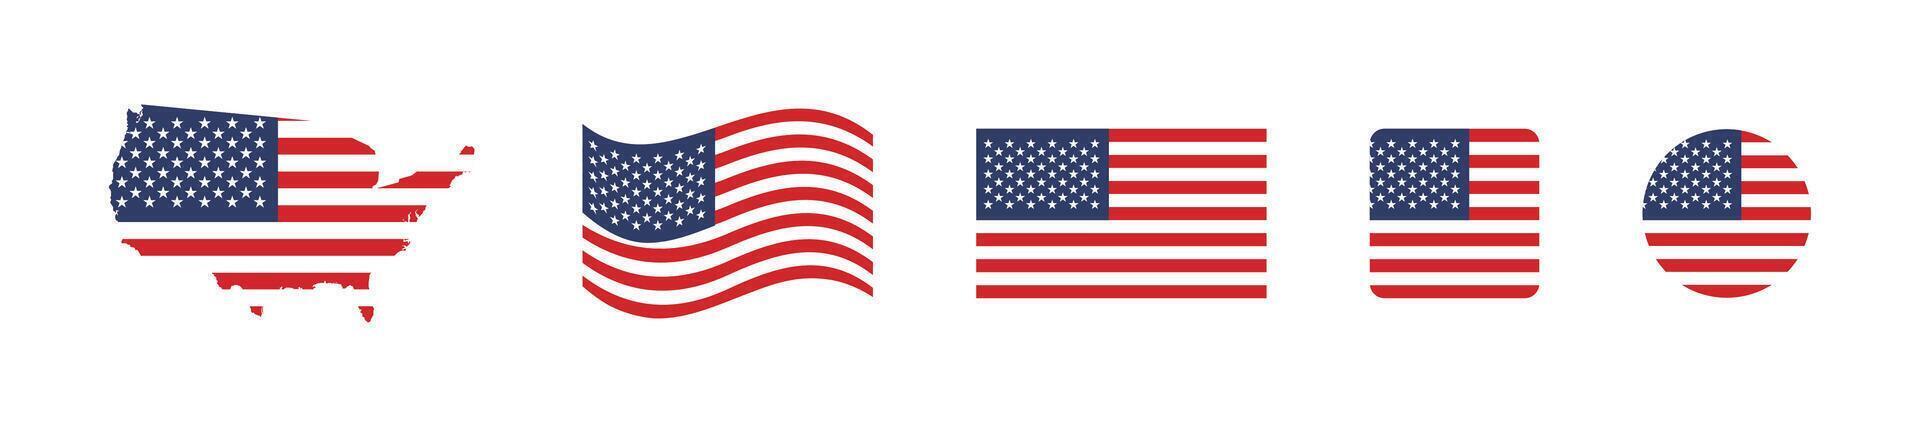 American national flag different shapes set. USA flags emblem. United States of America patriotic symbol set. vector